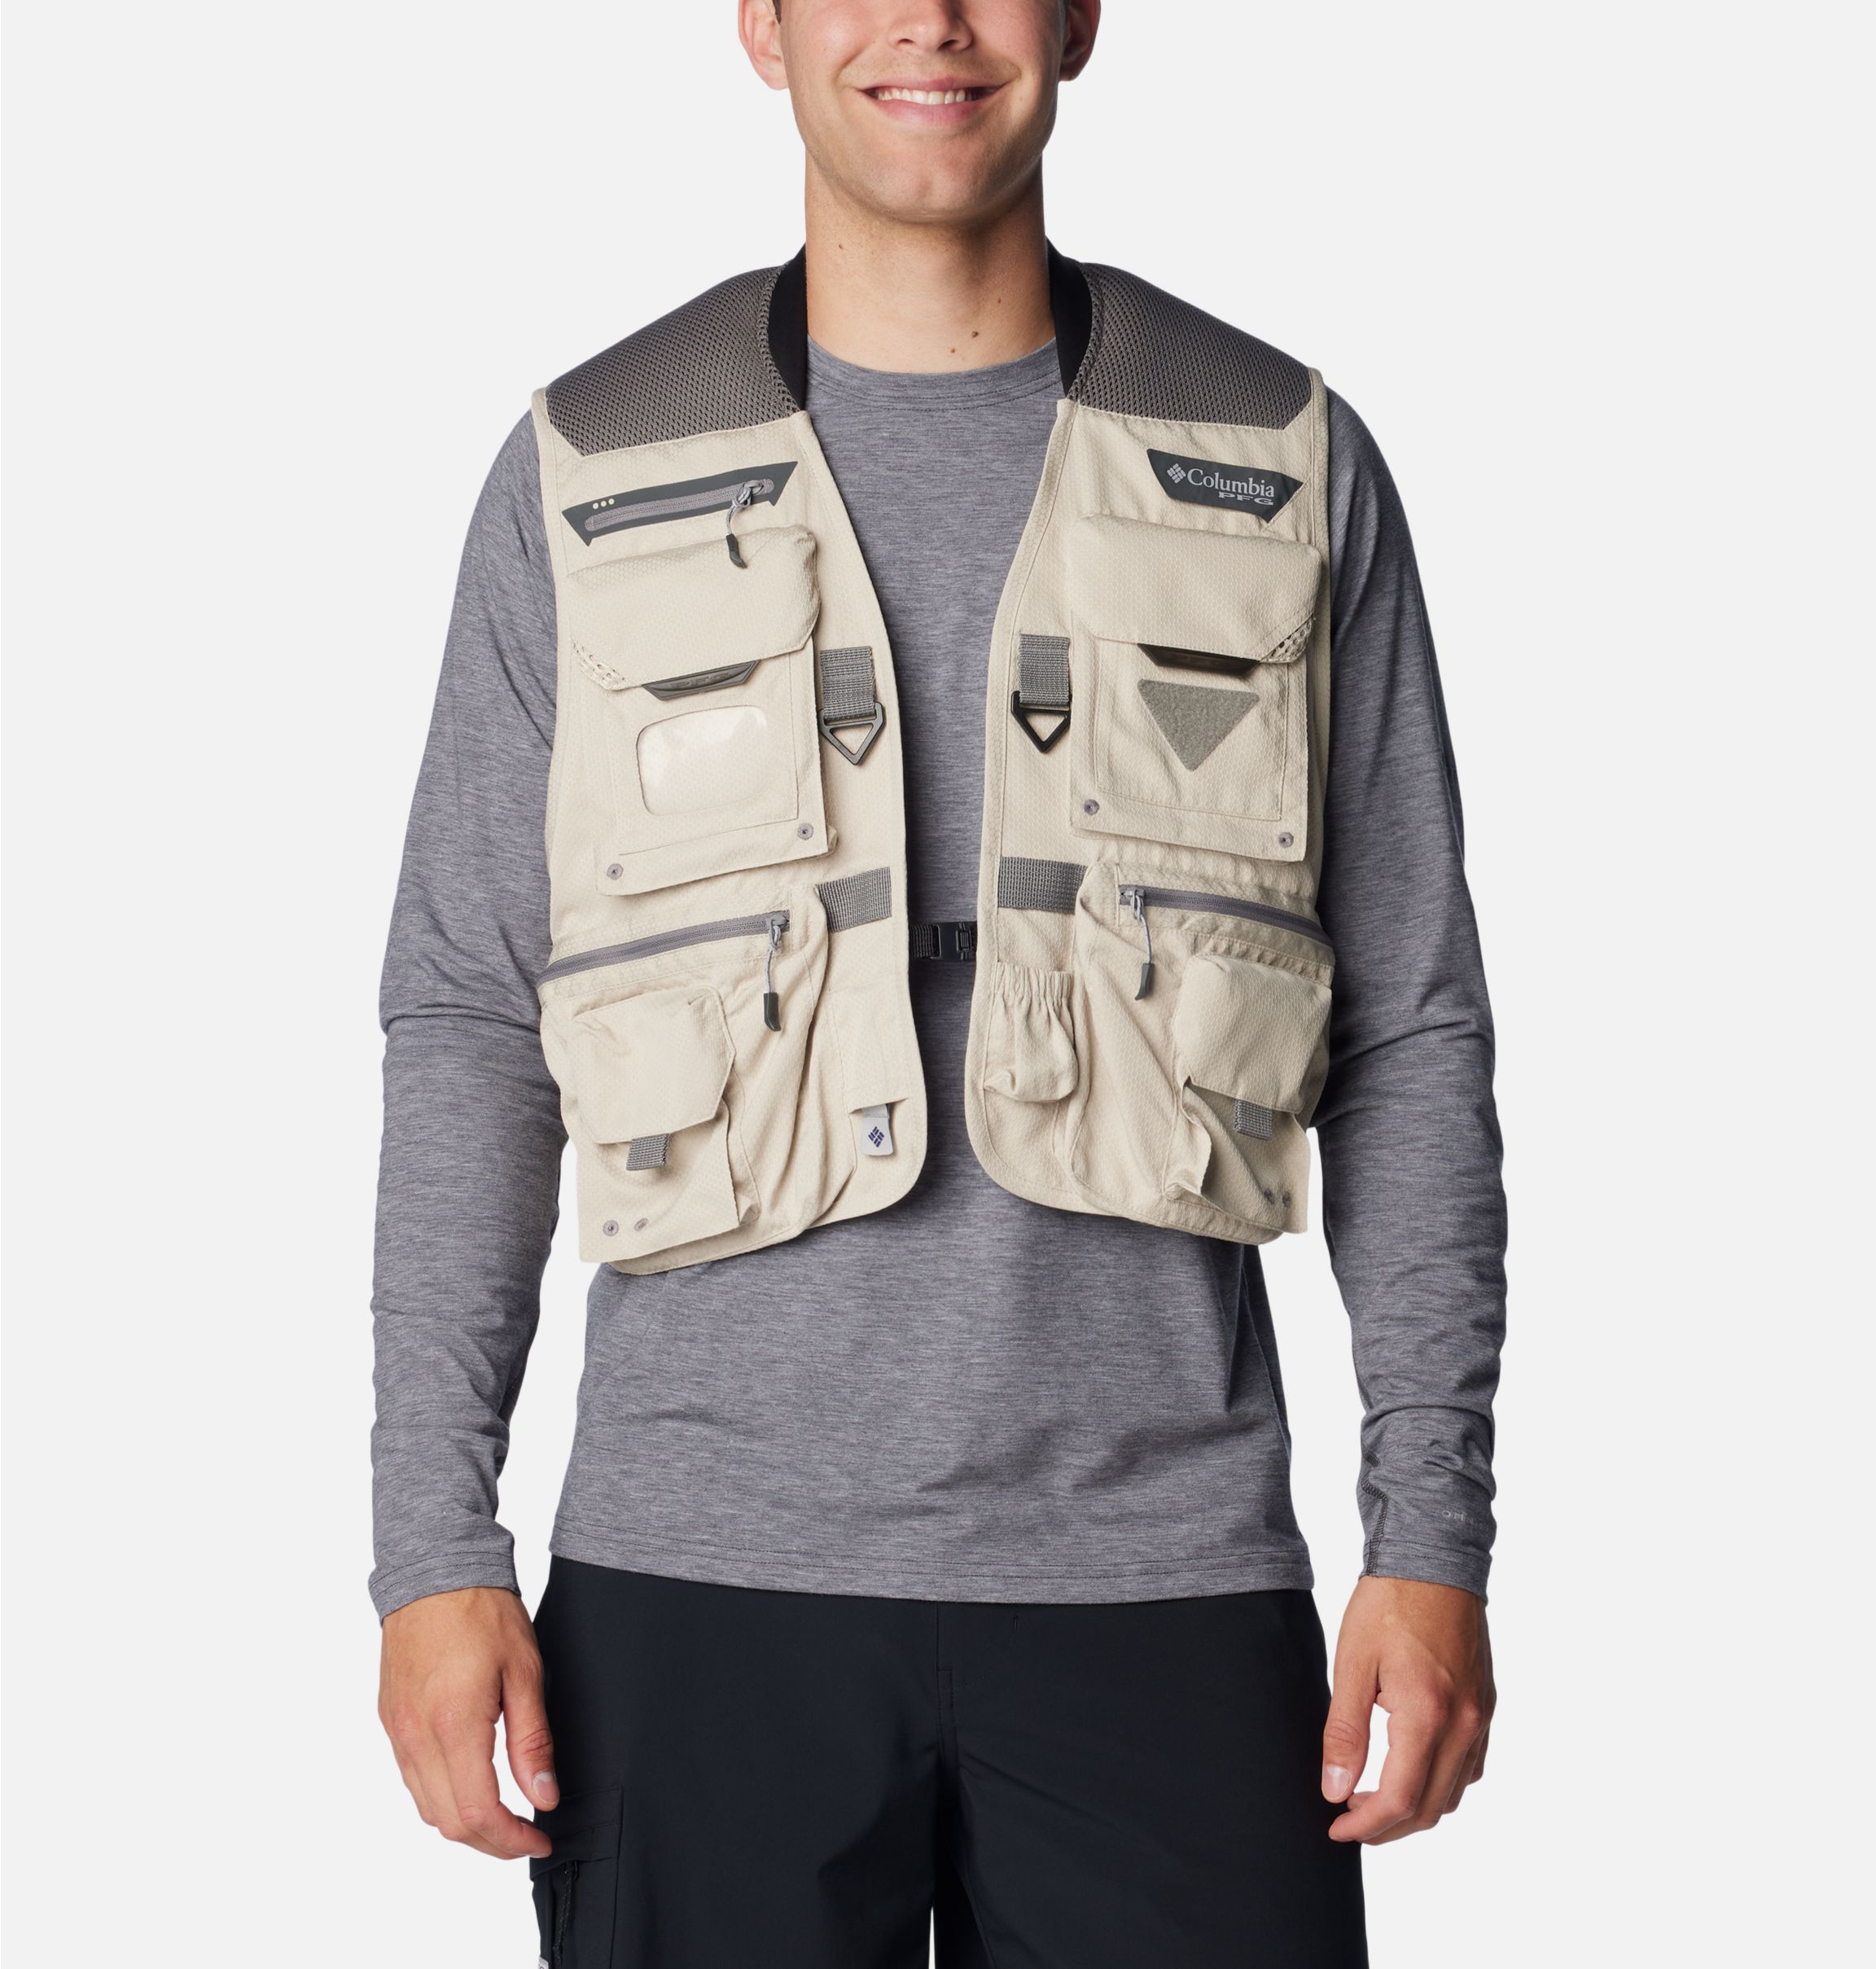 Columbia Fishing Vest - L/XL  Fishing vest, Clothes design, Fashion